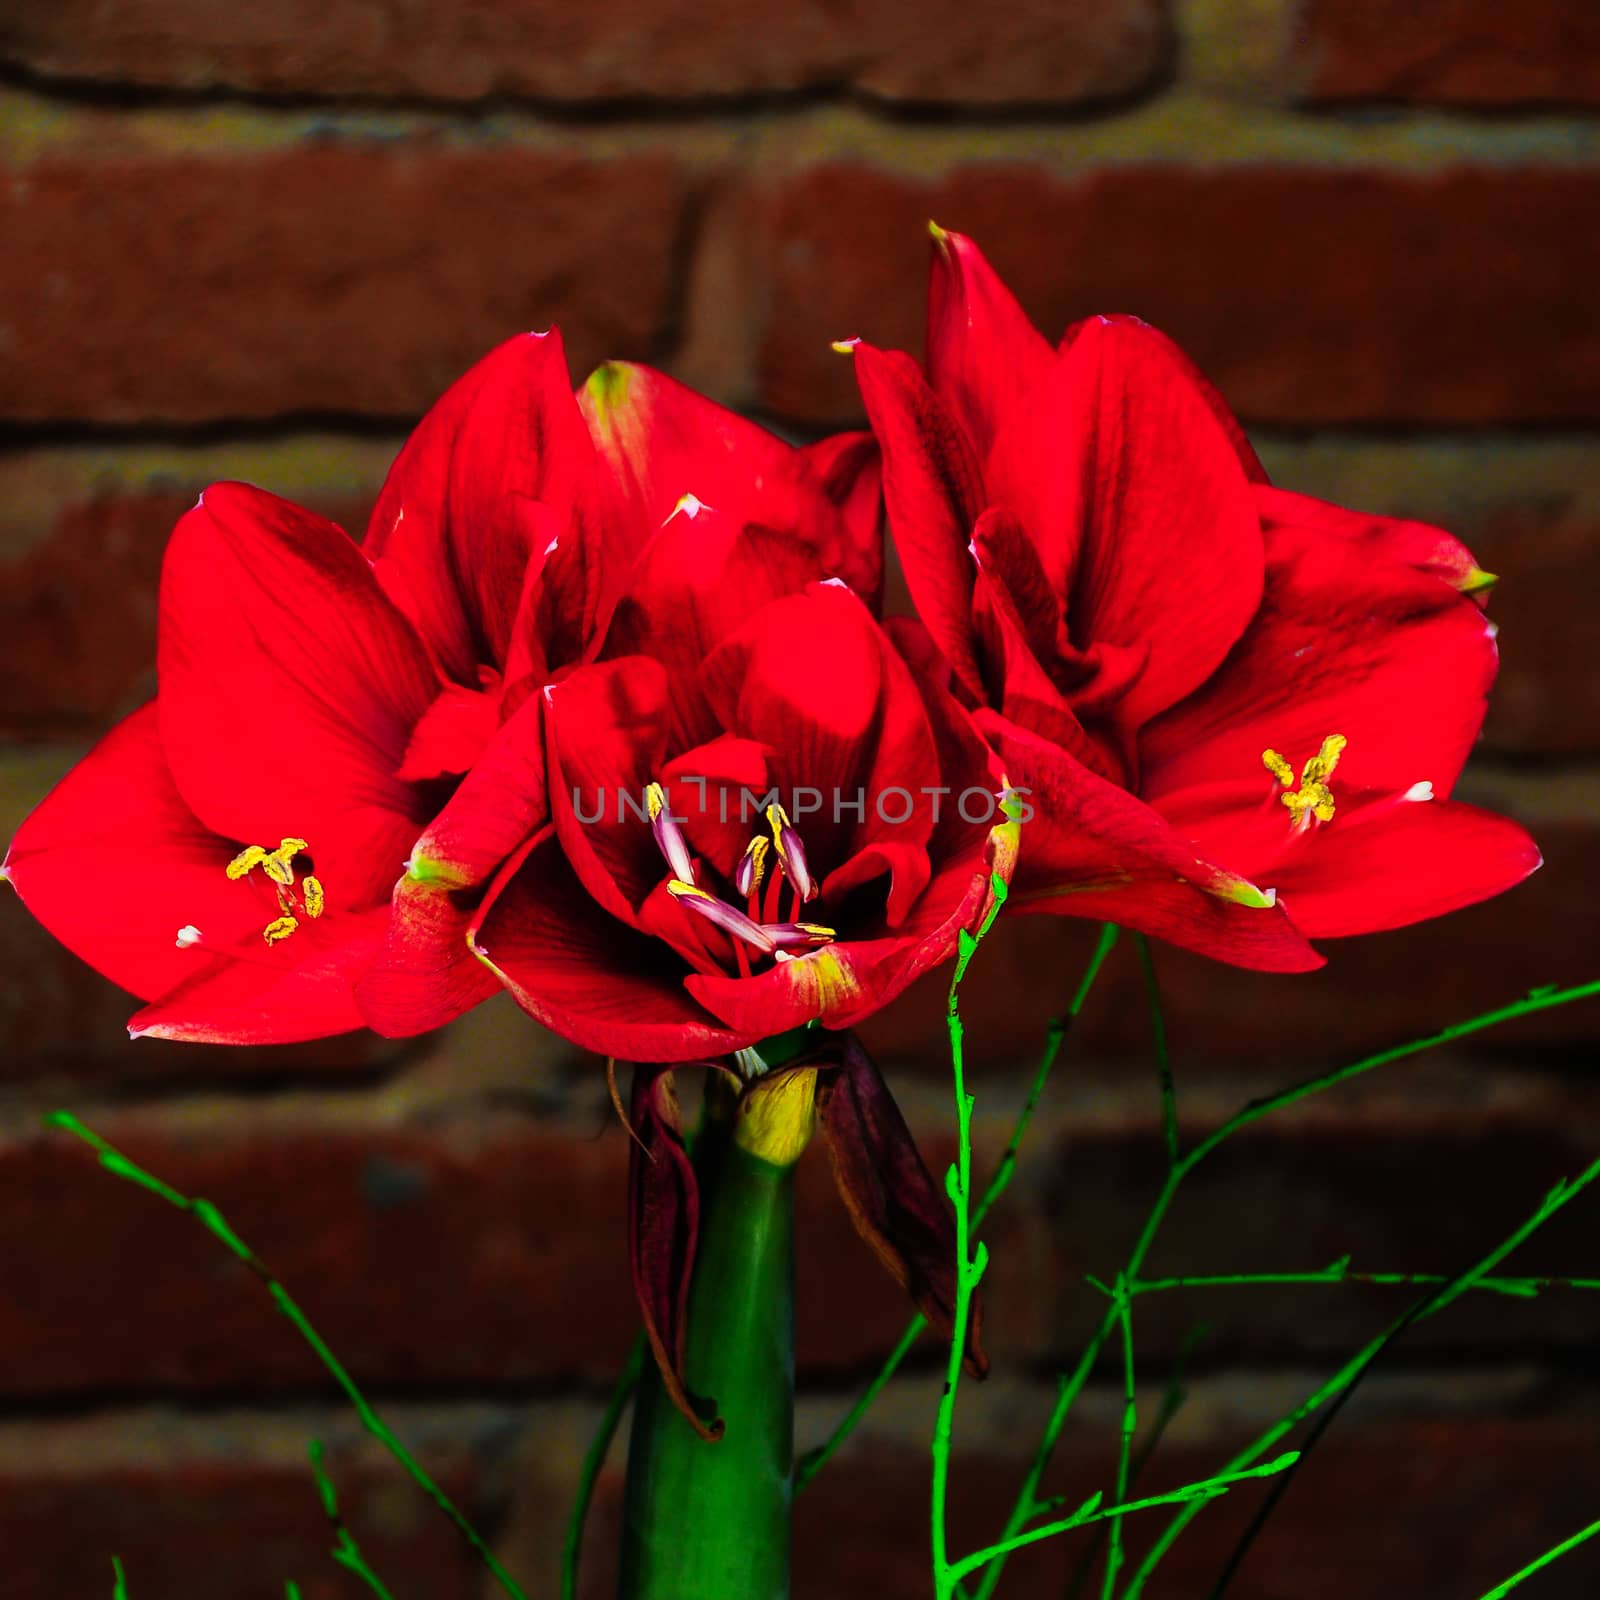 Amaryllis shot on background, red color